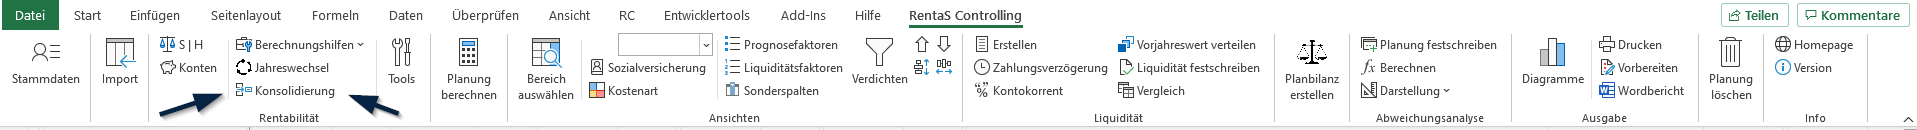 Konsolidierung_Menü_RentaS_Controllingsoftware